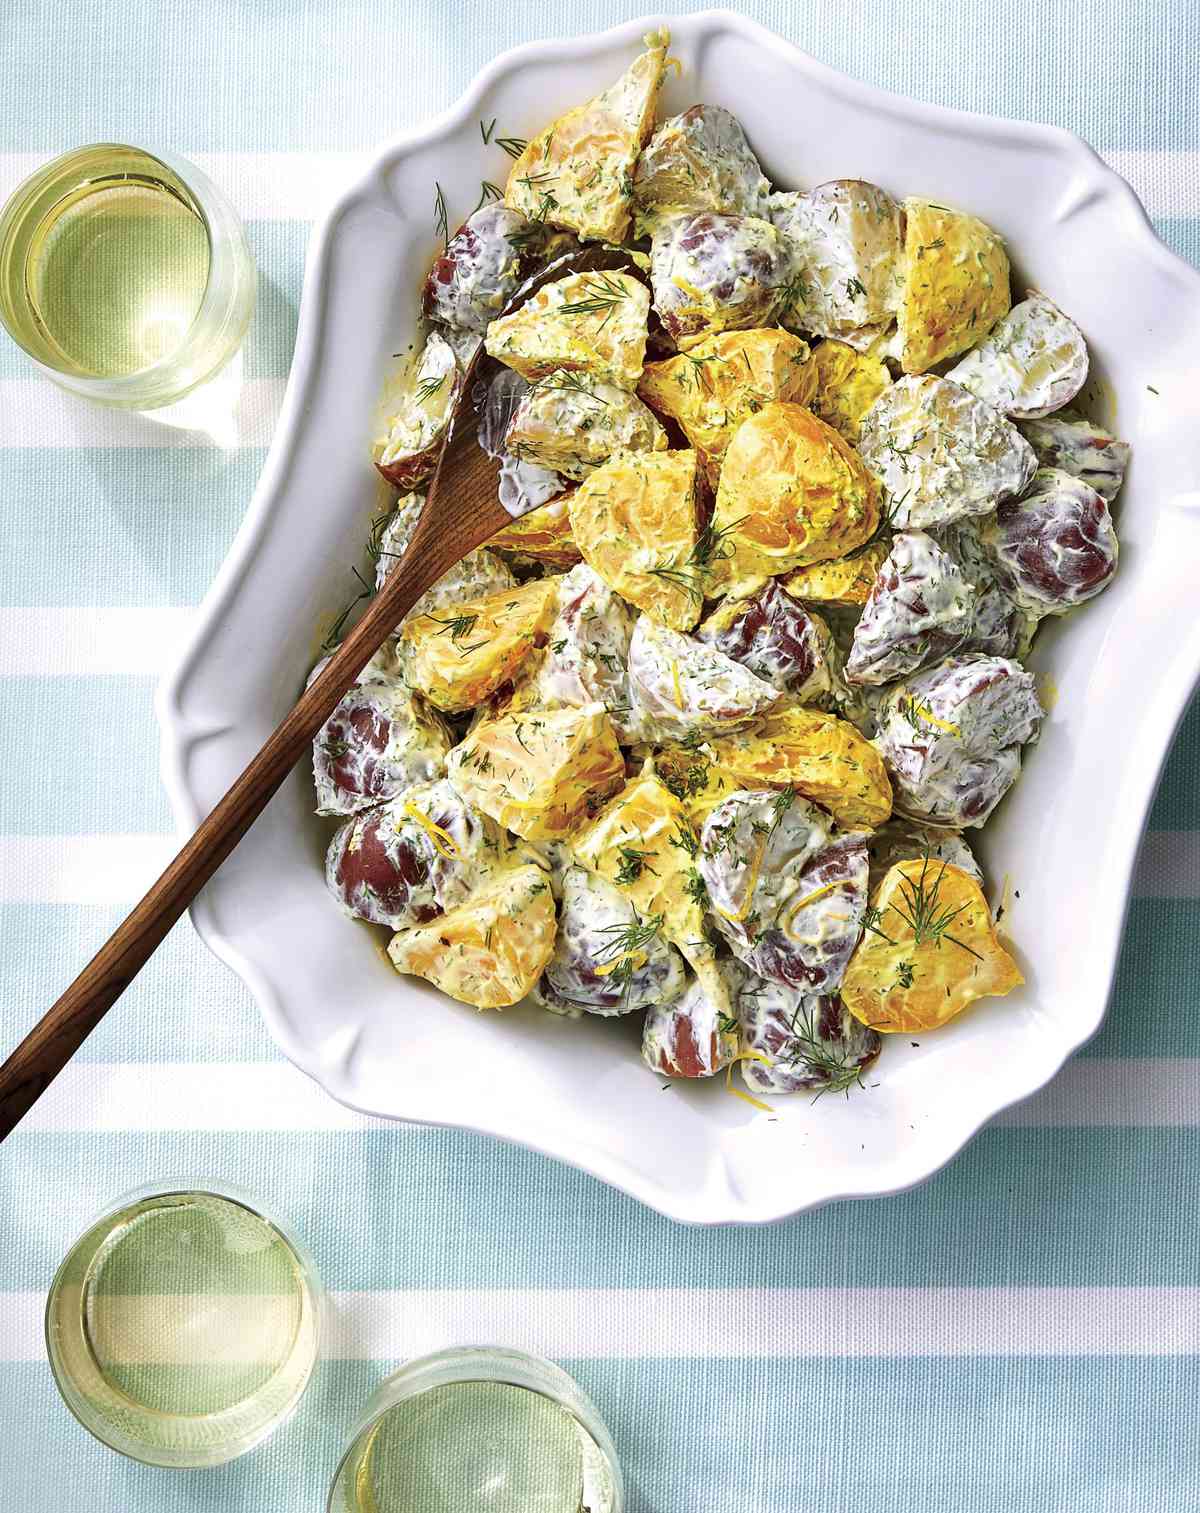 Lemony Potato-and-Beet Salad with Dill